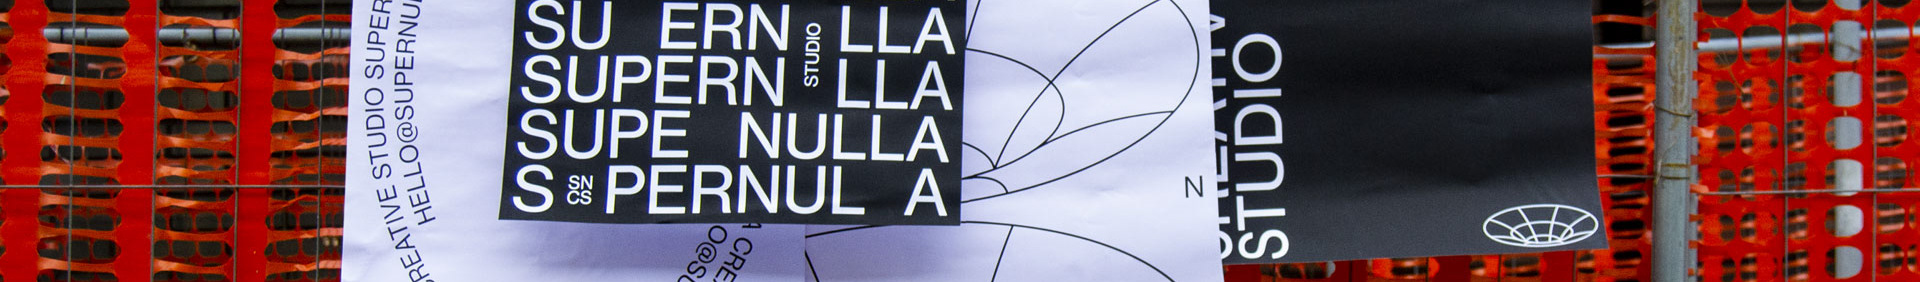 Bannière de profil de Supernulla Creative Studio